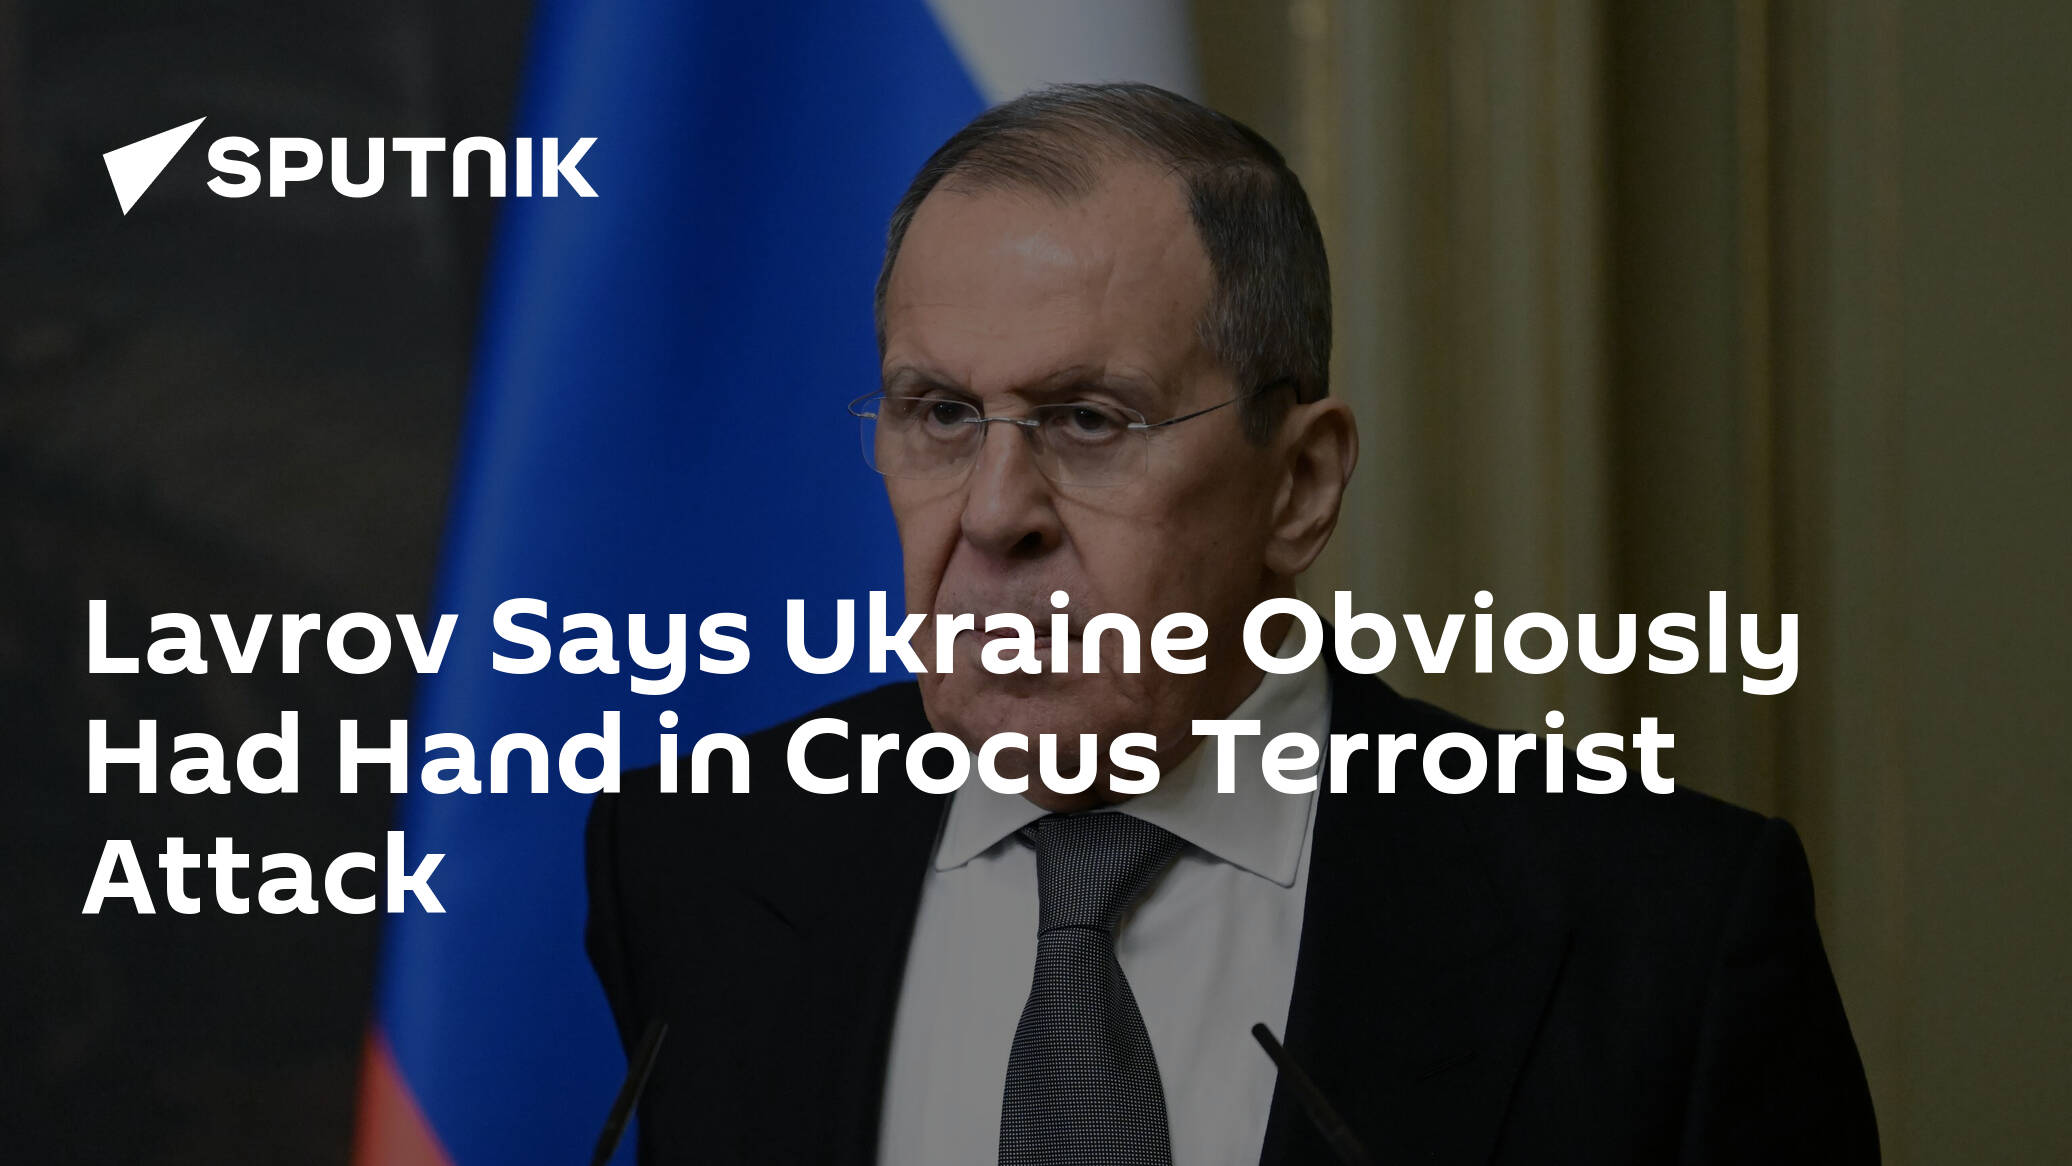 Lavrov Says Obvious That Ukraine Involved in Terrorist Attack in Crocus